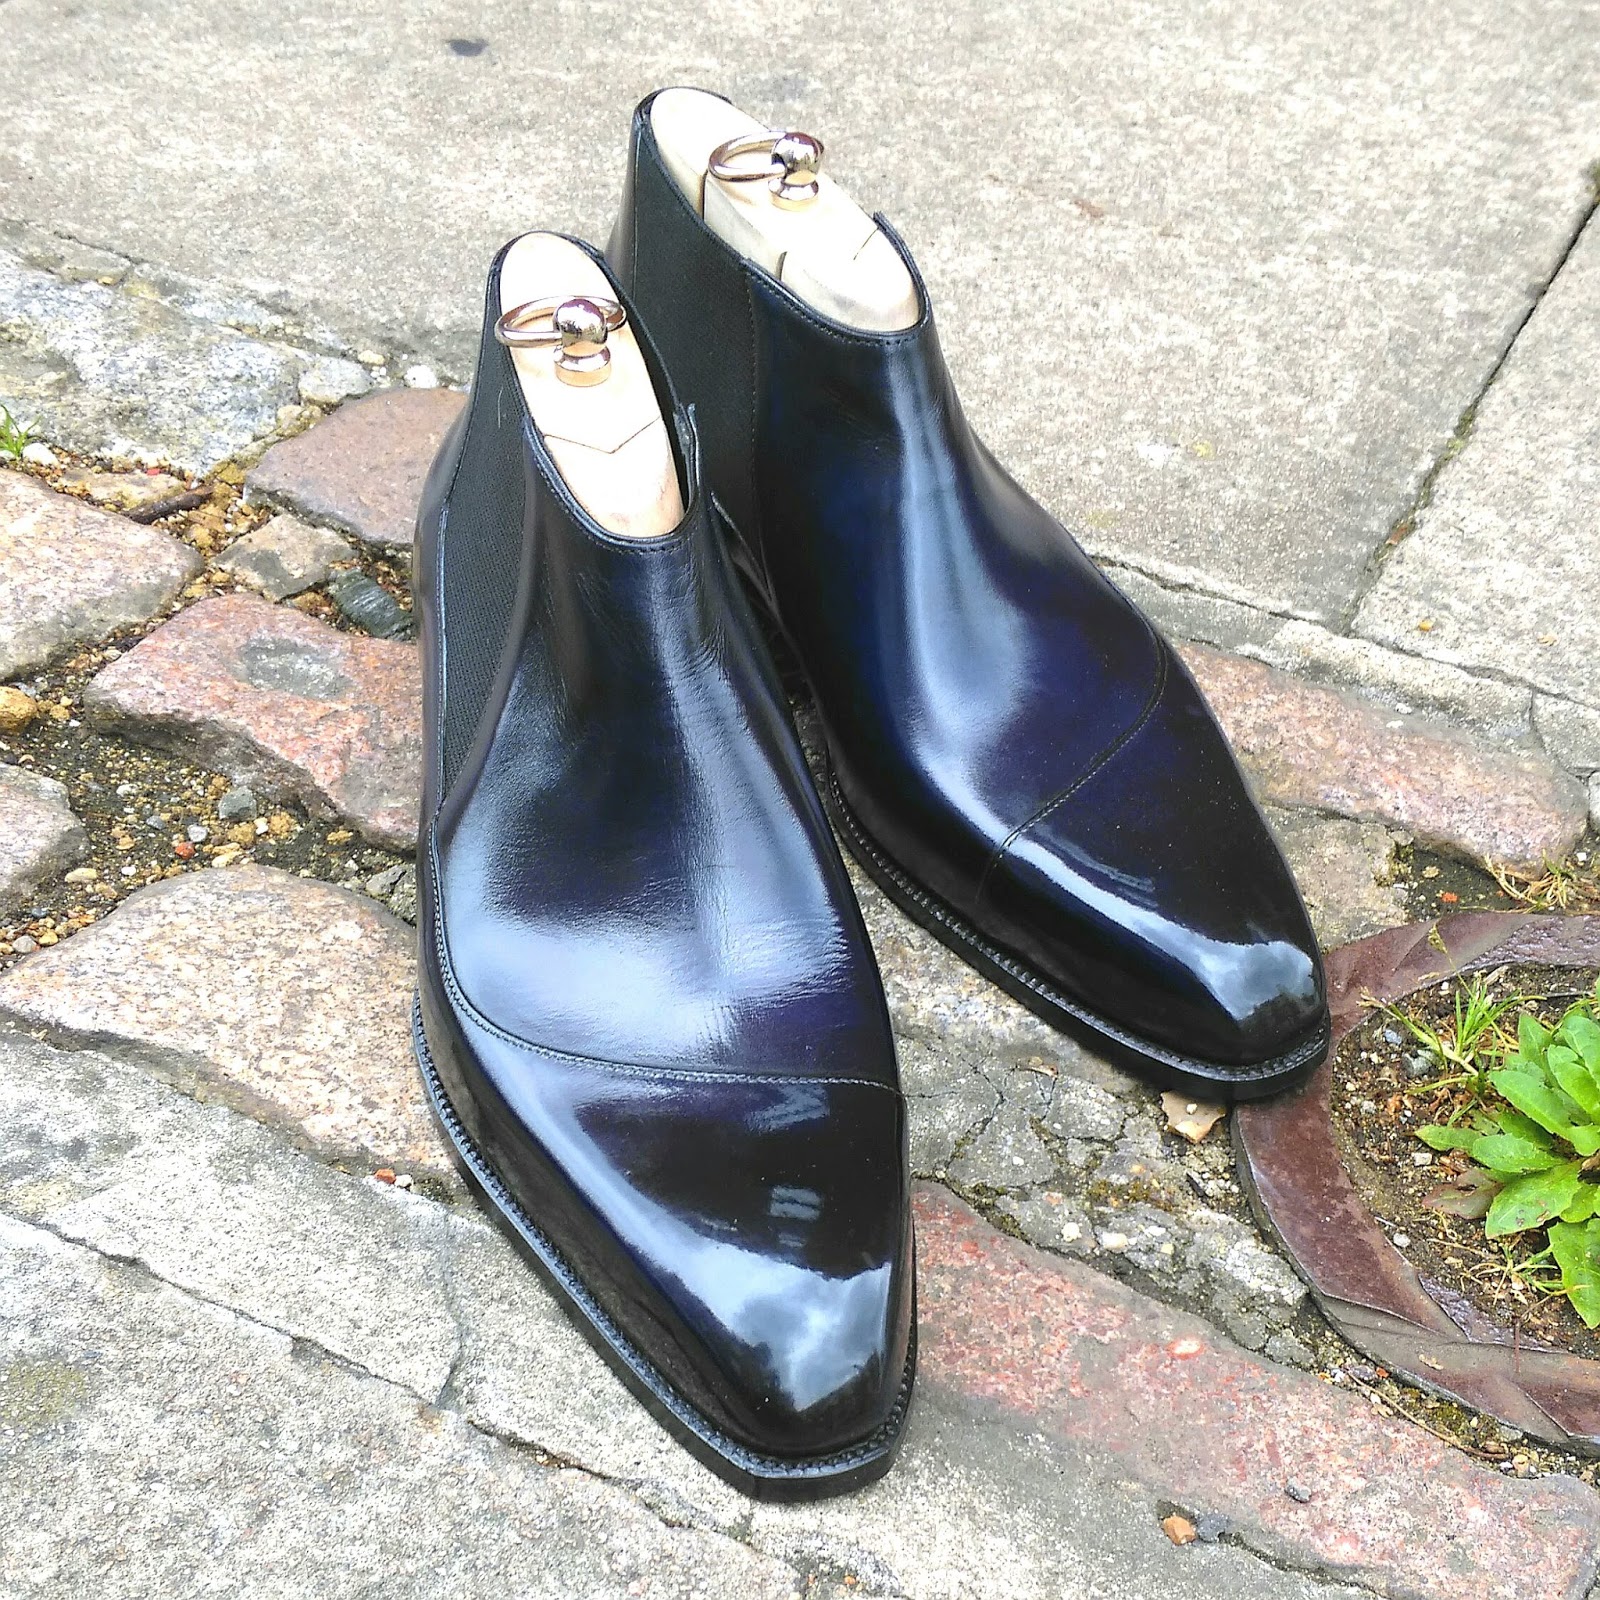 Bespoke Shoes Unlaced – a shoemaker's blog